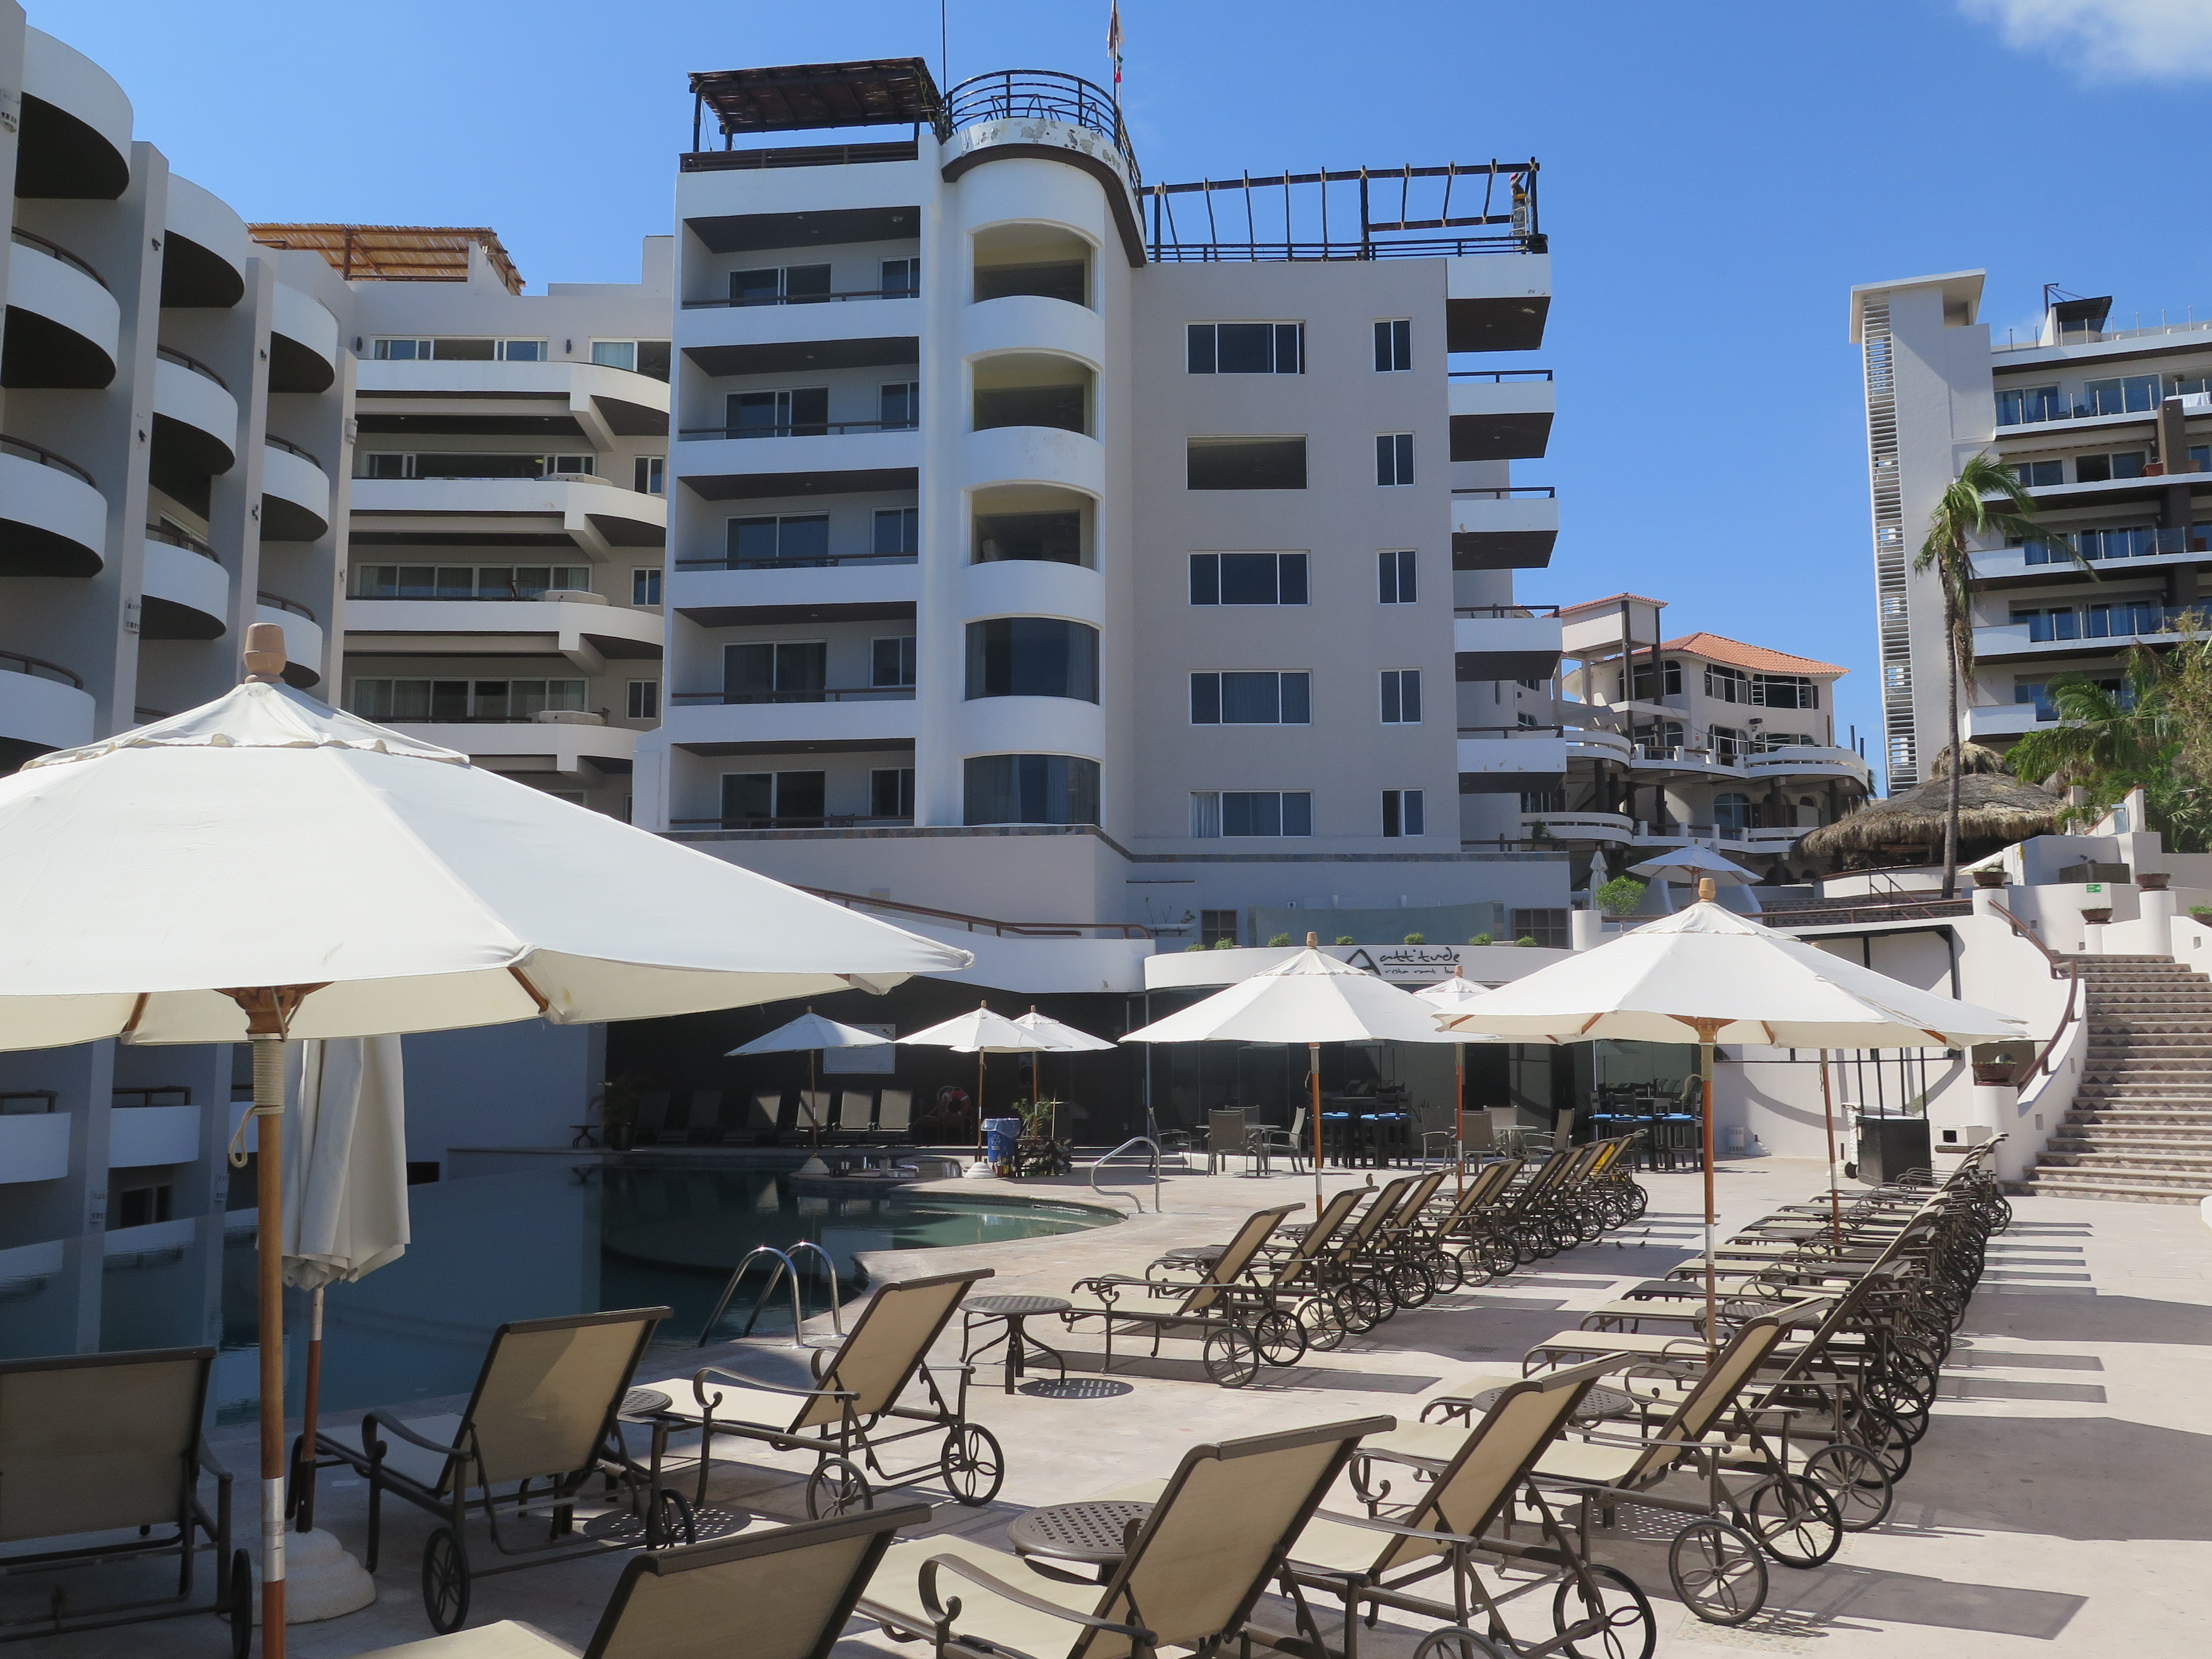 Cabo Villas Beach Resort & Spa Opens Ahead of Schedule Following